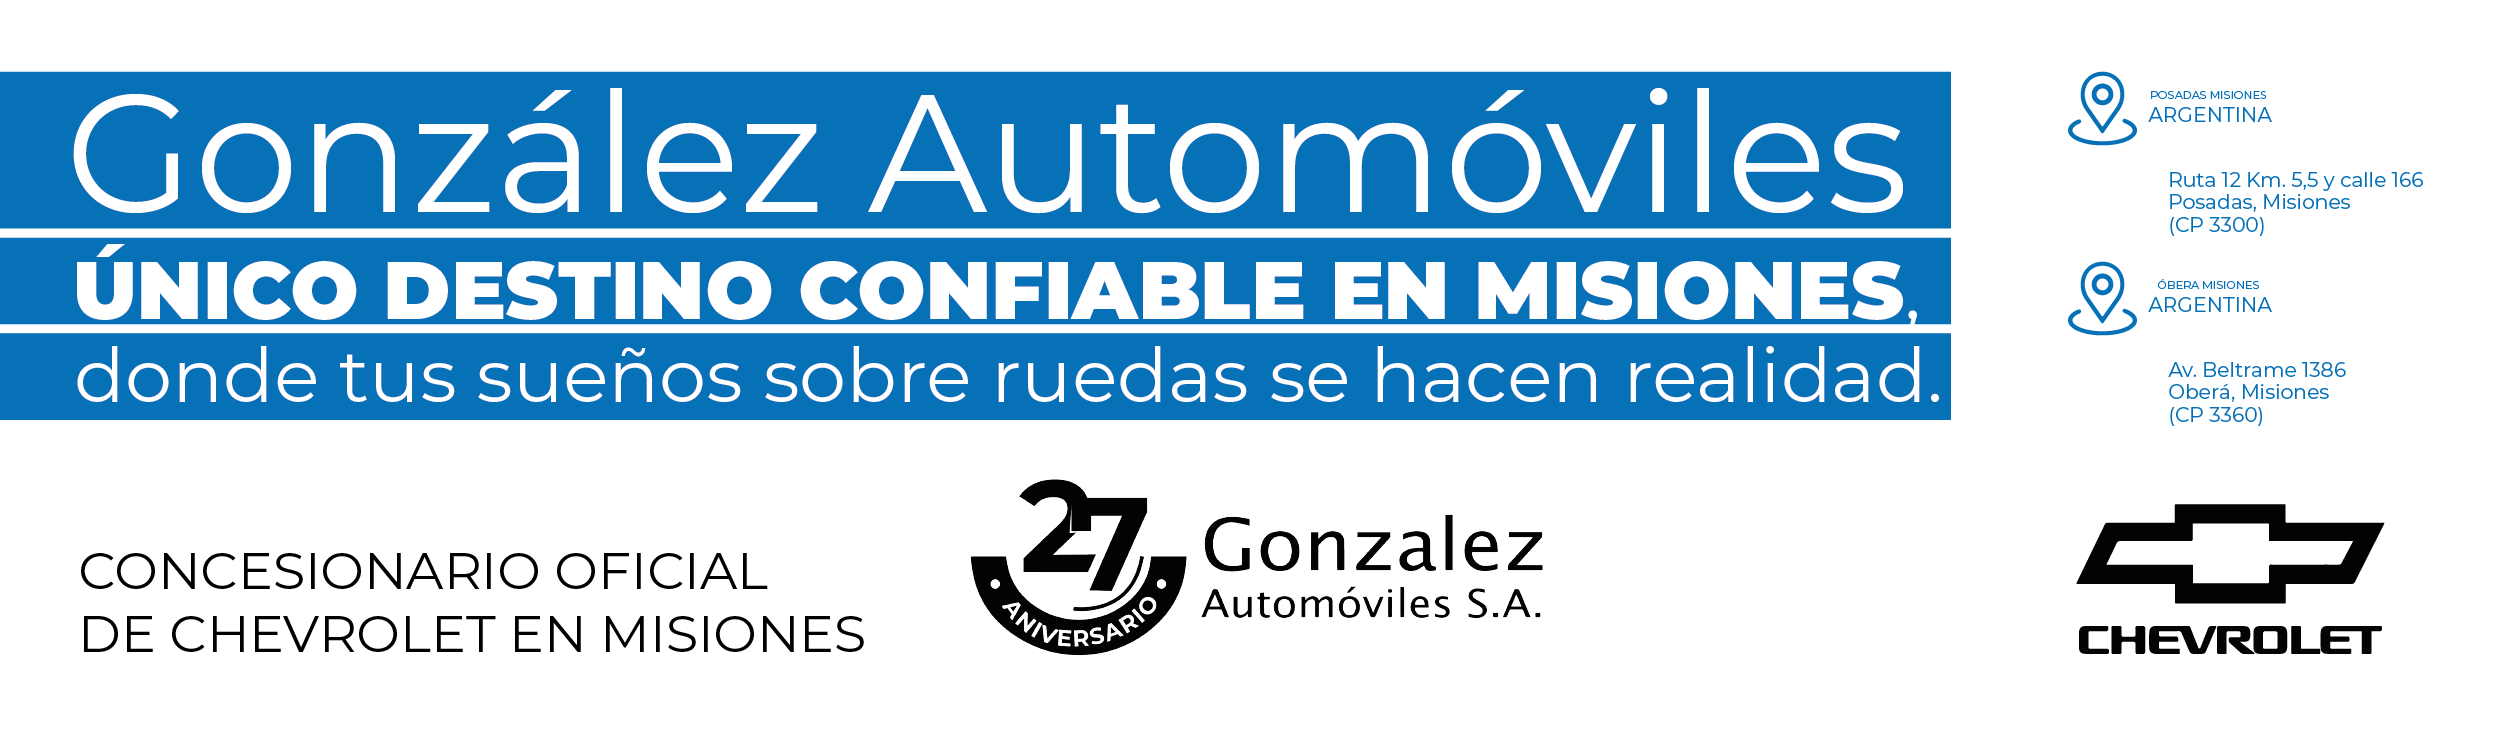 González Automoviles 